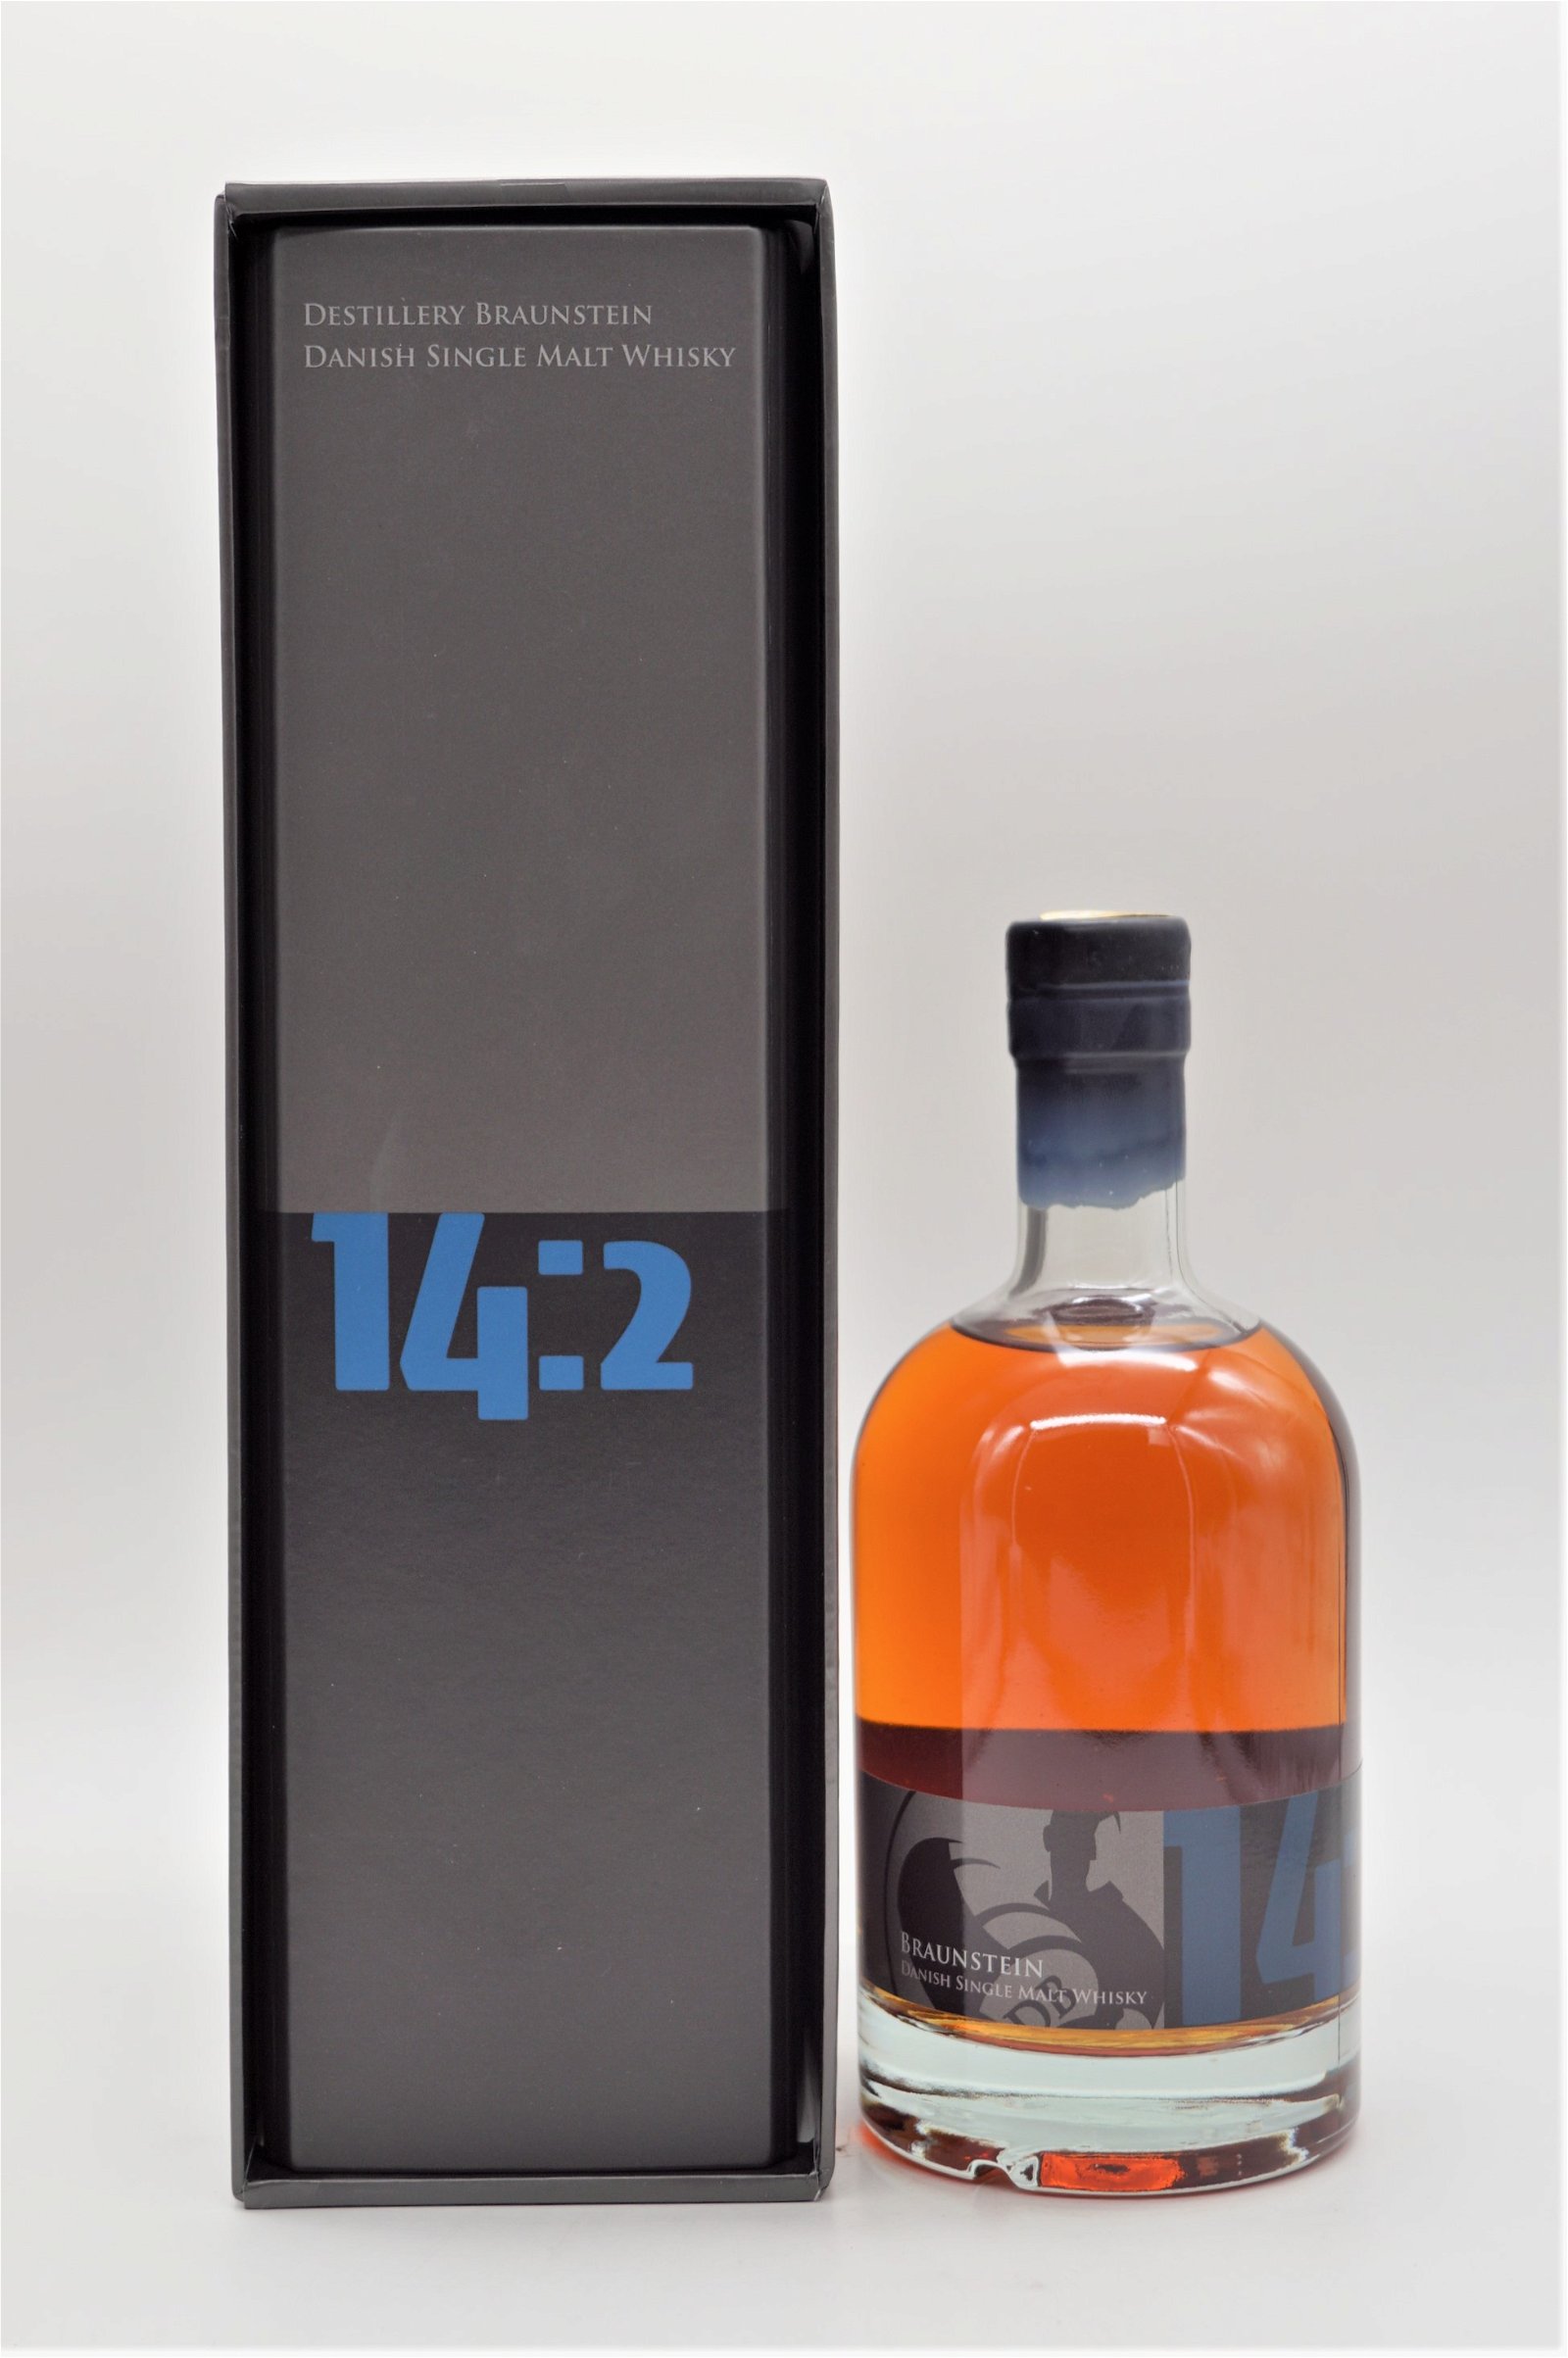 Braunstein Libary Collection 14:2 Dansk Single Malt Whisky